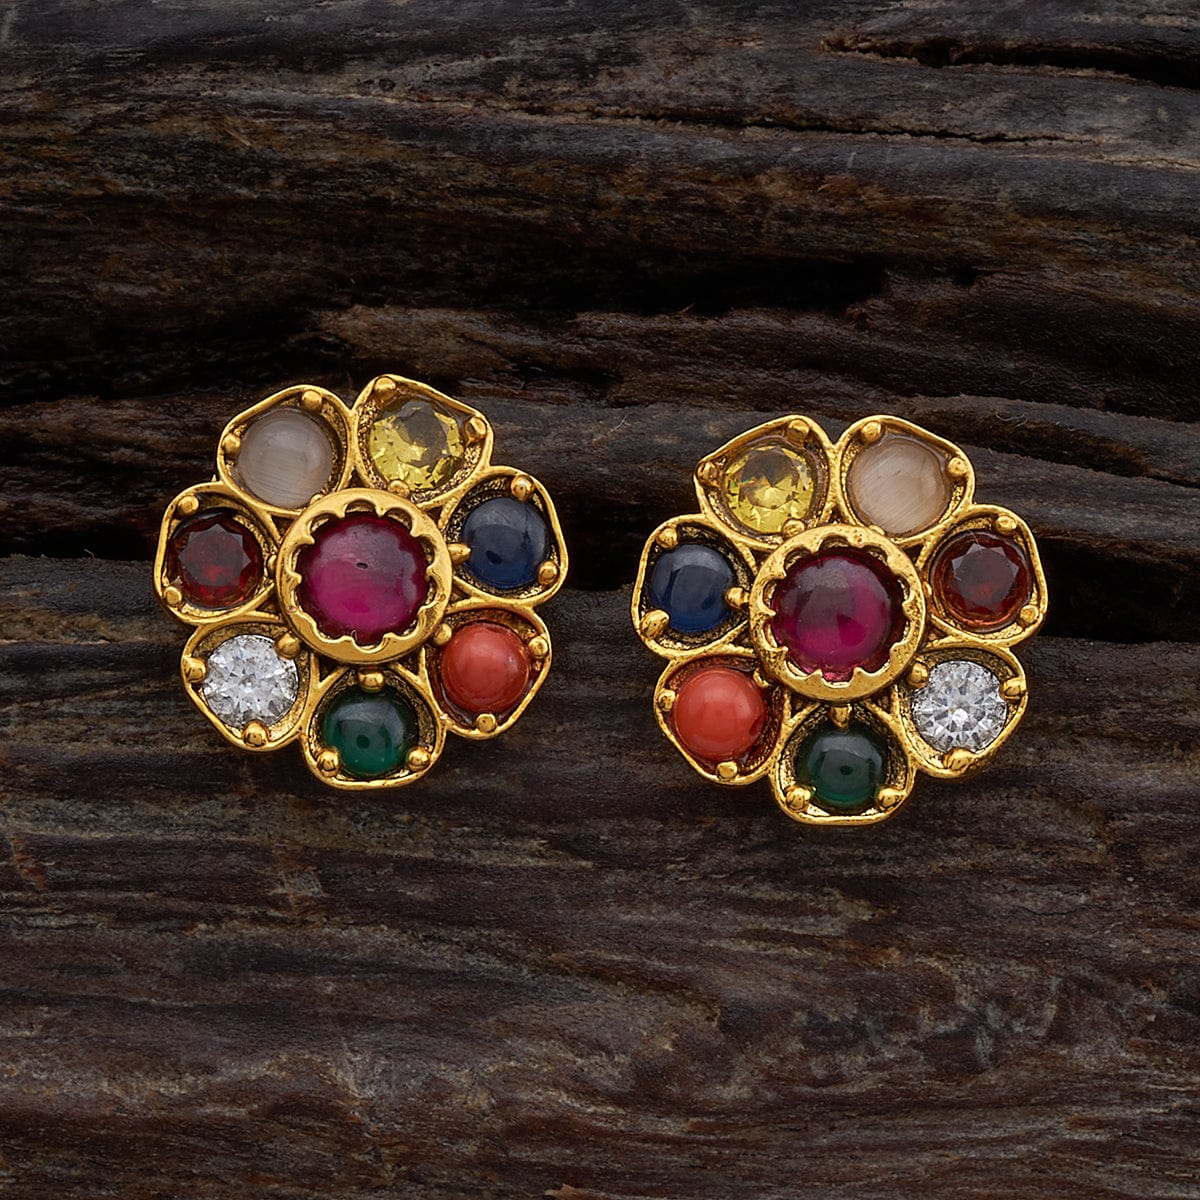 Shop Kaleidoscopic Navaratna 22K Gold Stud Earrings Online in India | Gehna  | Gold earrings studs, Mens gold jewelry, Real gold jewelry